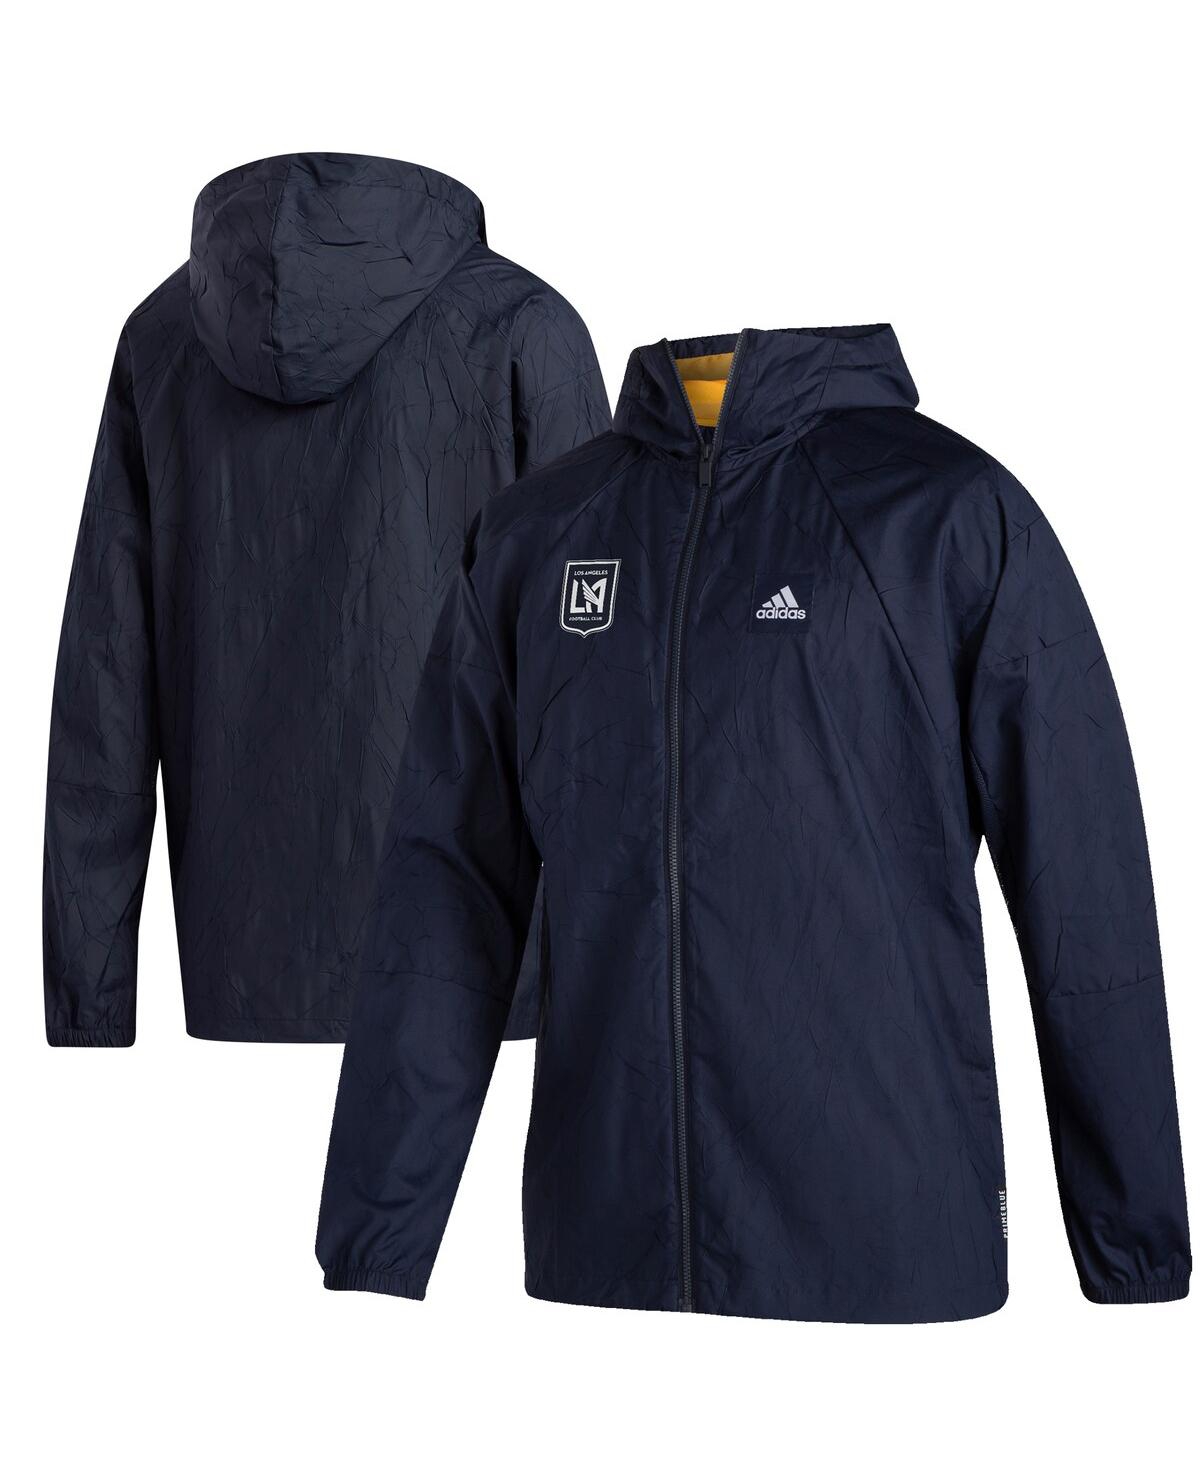 Shop Adidas Originals Men's Adidas Navy Lafc Full-zip Jacket